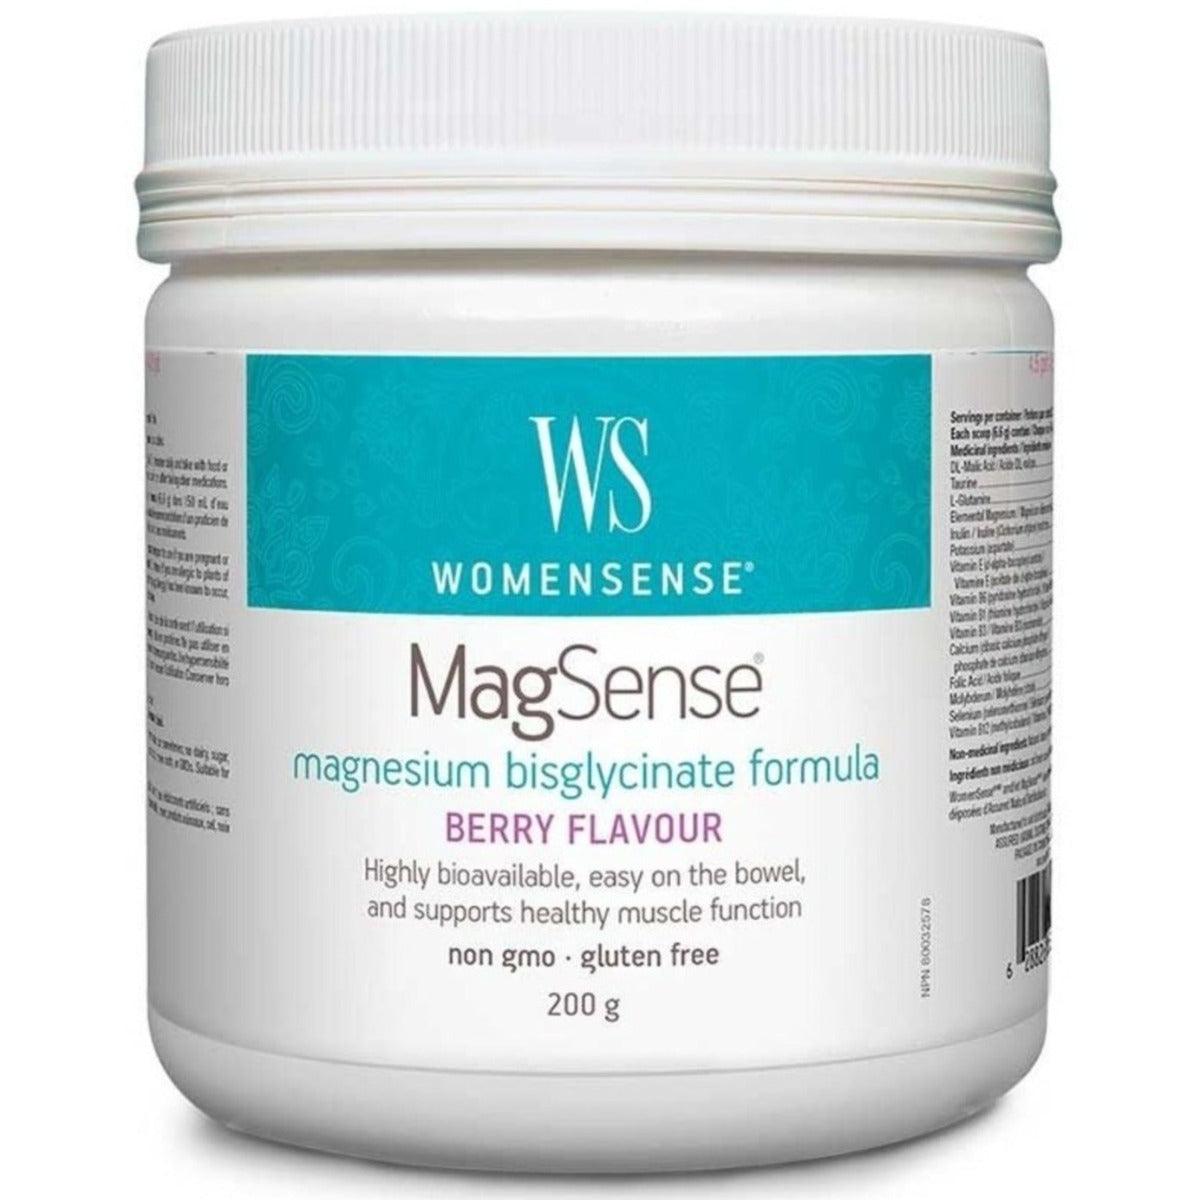 Women Sense MagSense Powder - BERRY 200G Minerals - Magnesium at Village Vitamin Store